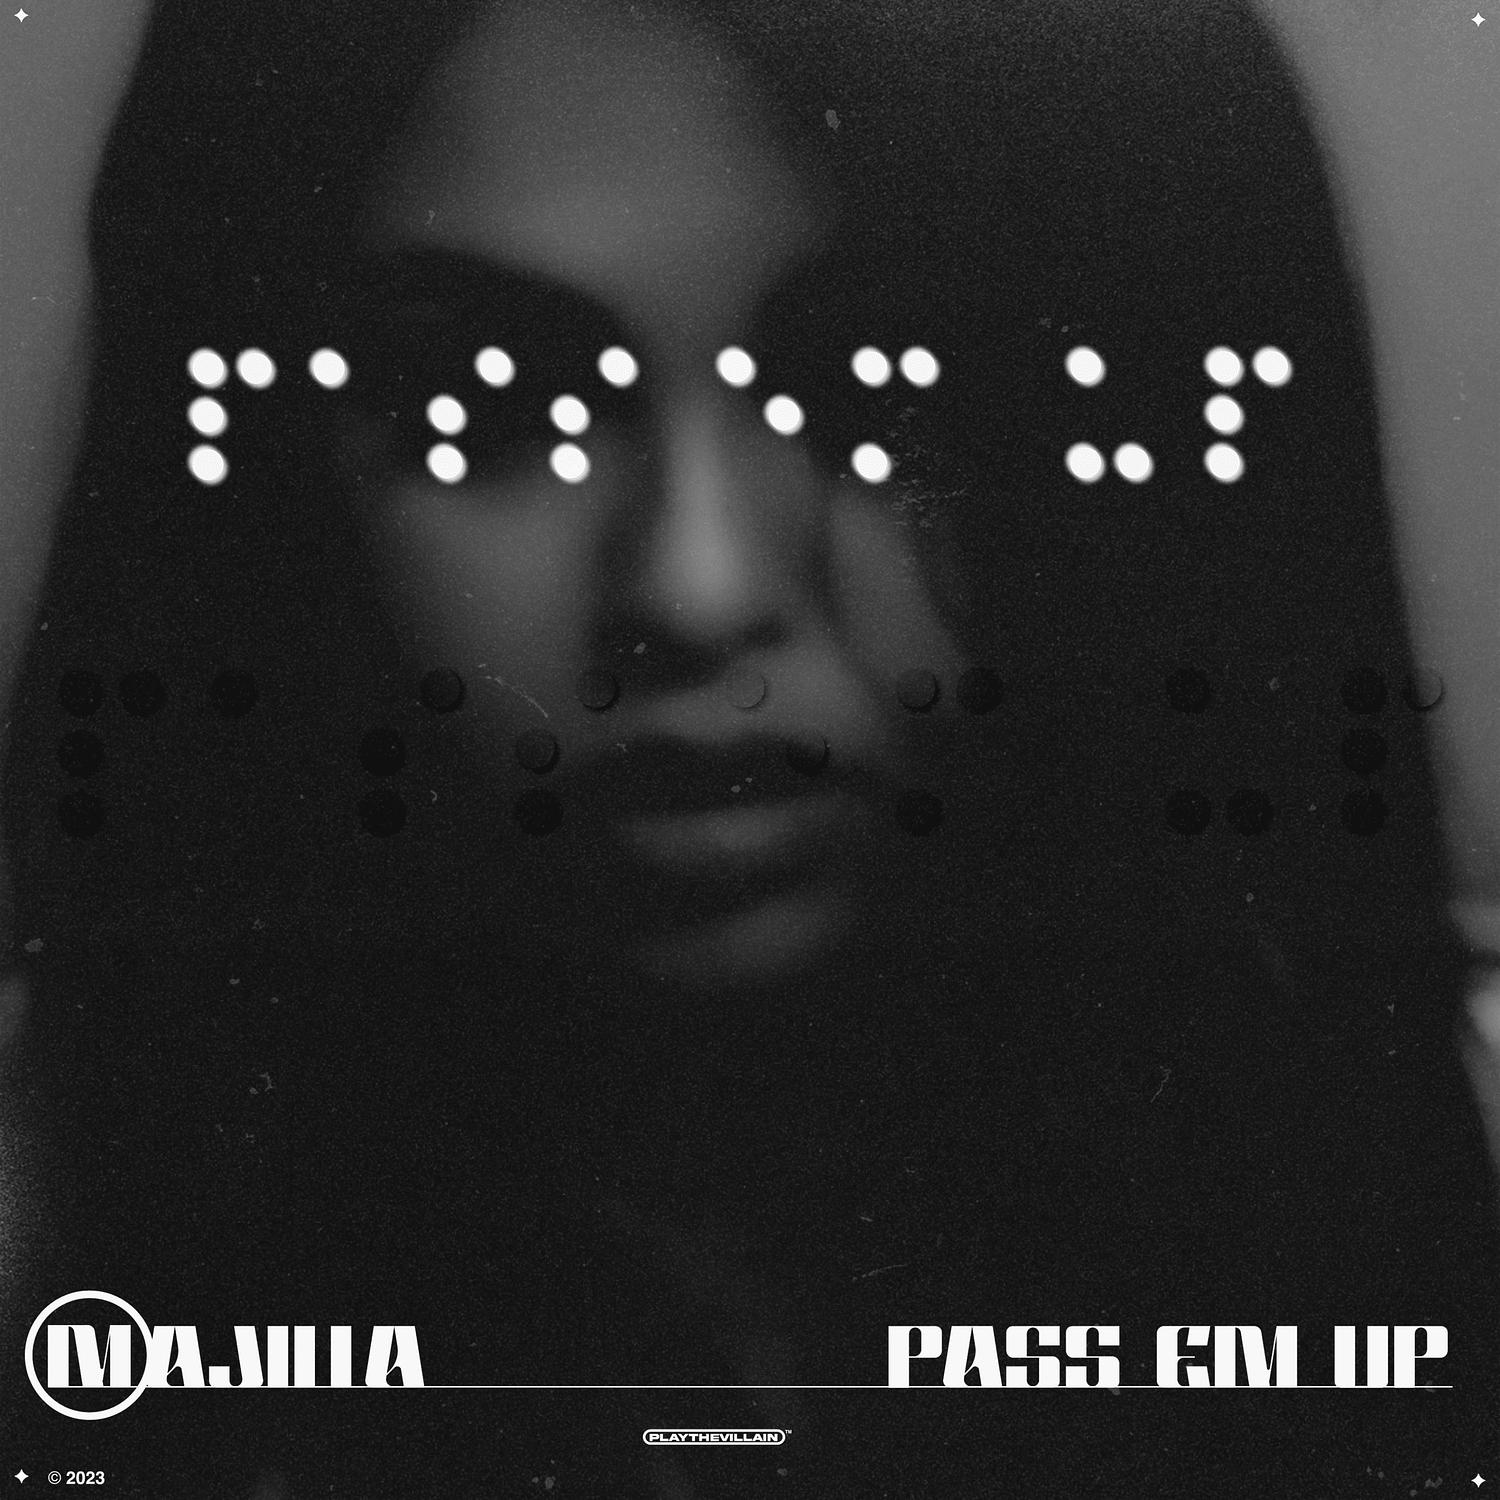 MAJILLA - Pass Em up (Sped up Version)